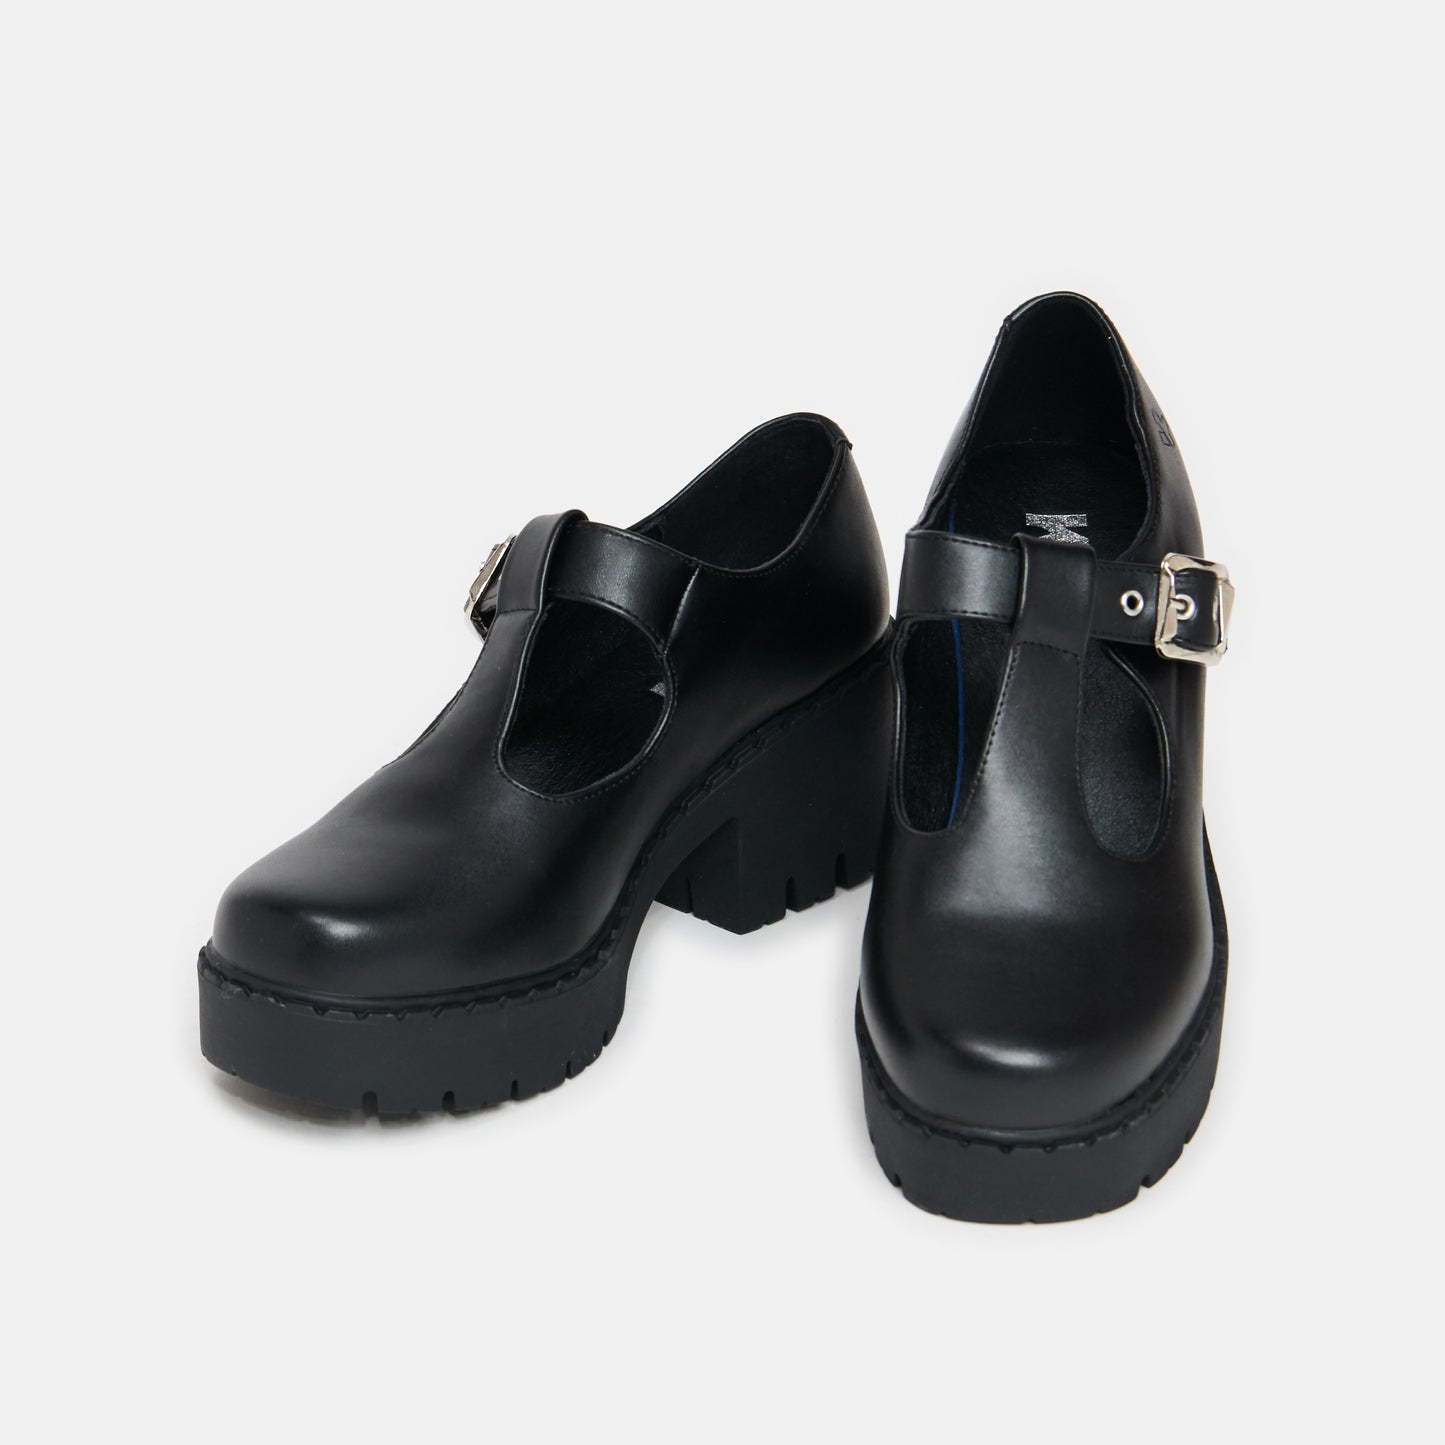 Kazuki Switch Mary Jane Shoes - Mary Janes - KOI Footwear - Black - Front View